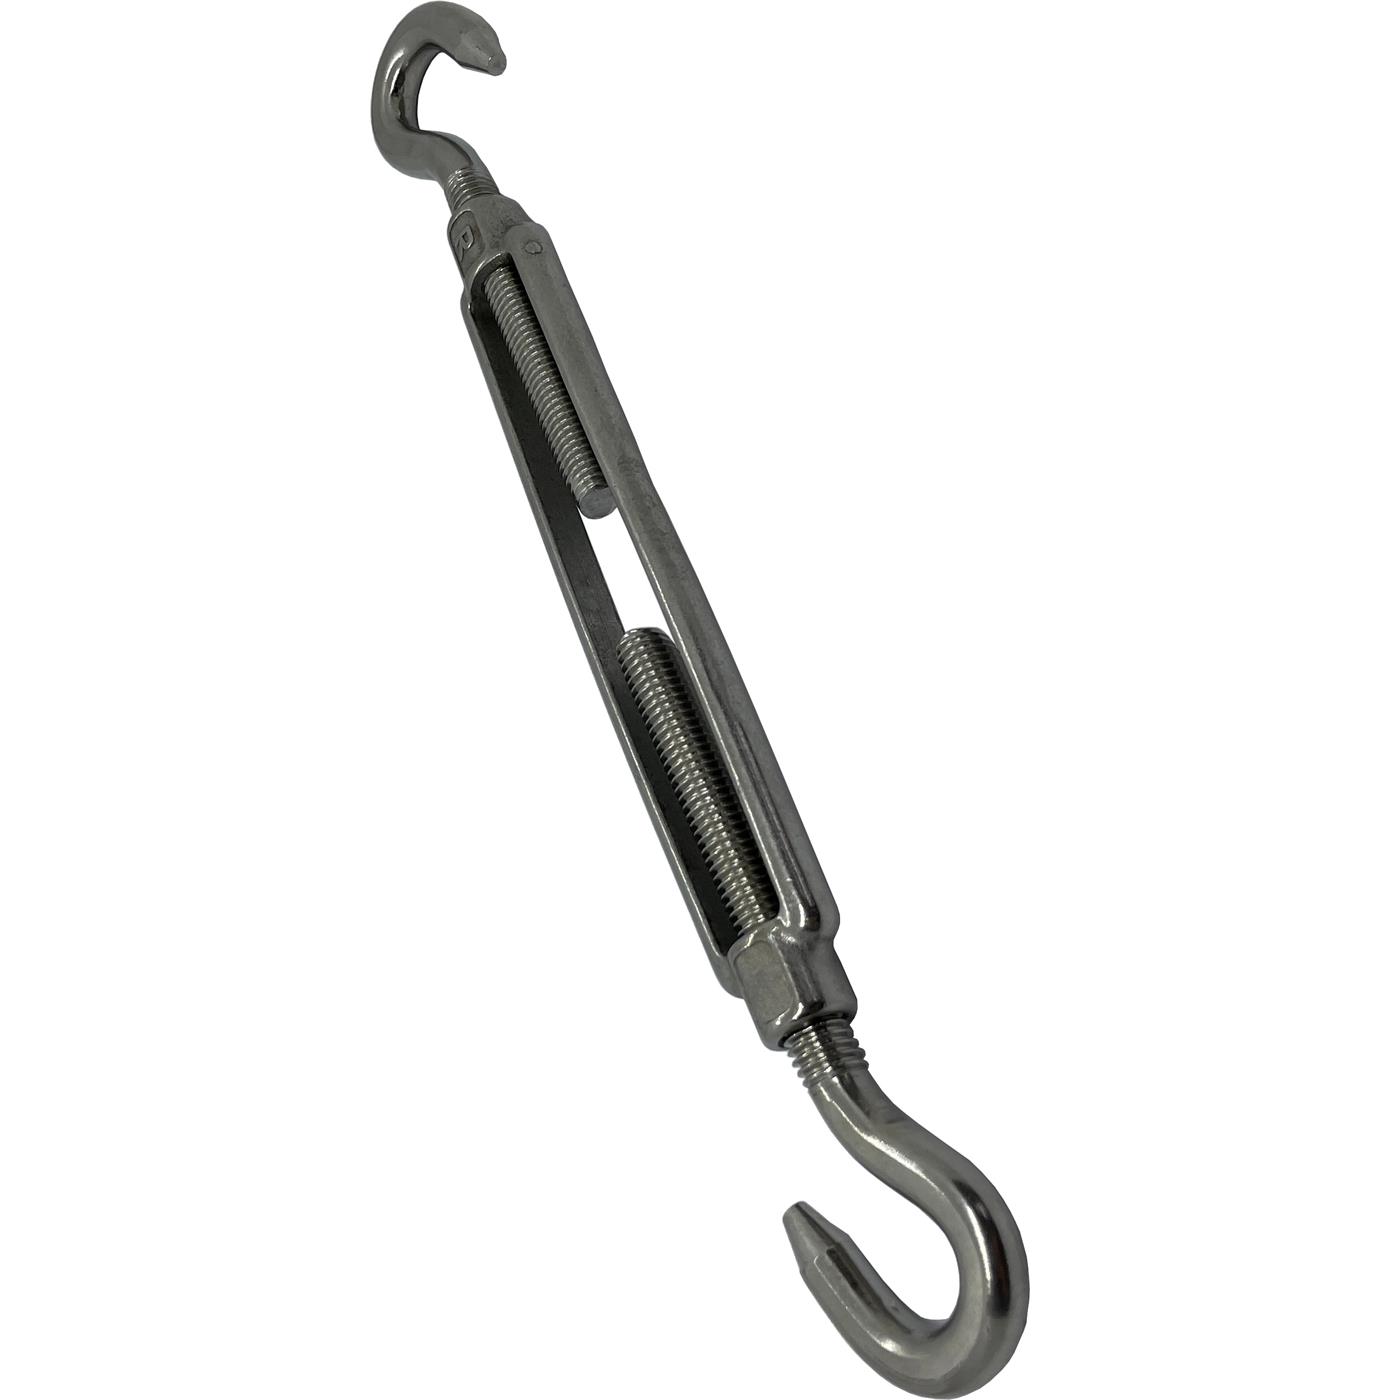 Rope tensioner Hook-Hook Stainless steel V2A 304 M10 Turnbuckle Shroud clamp